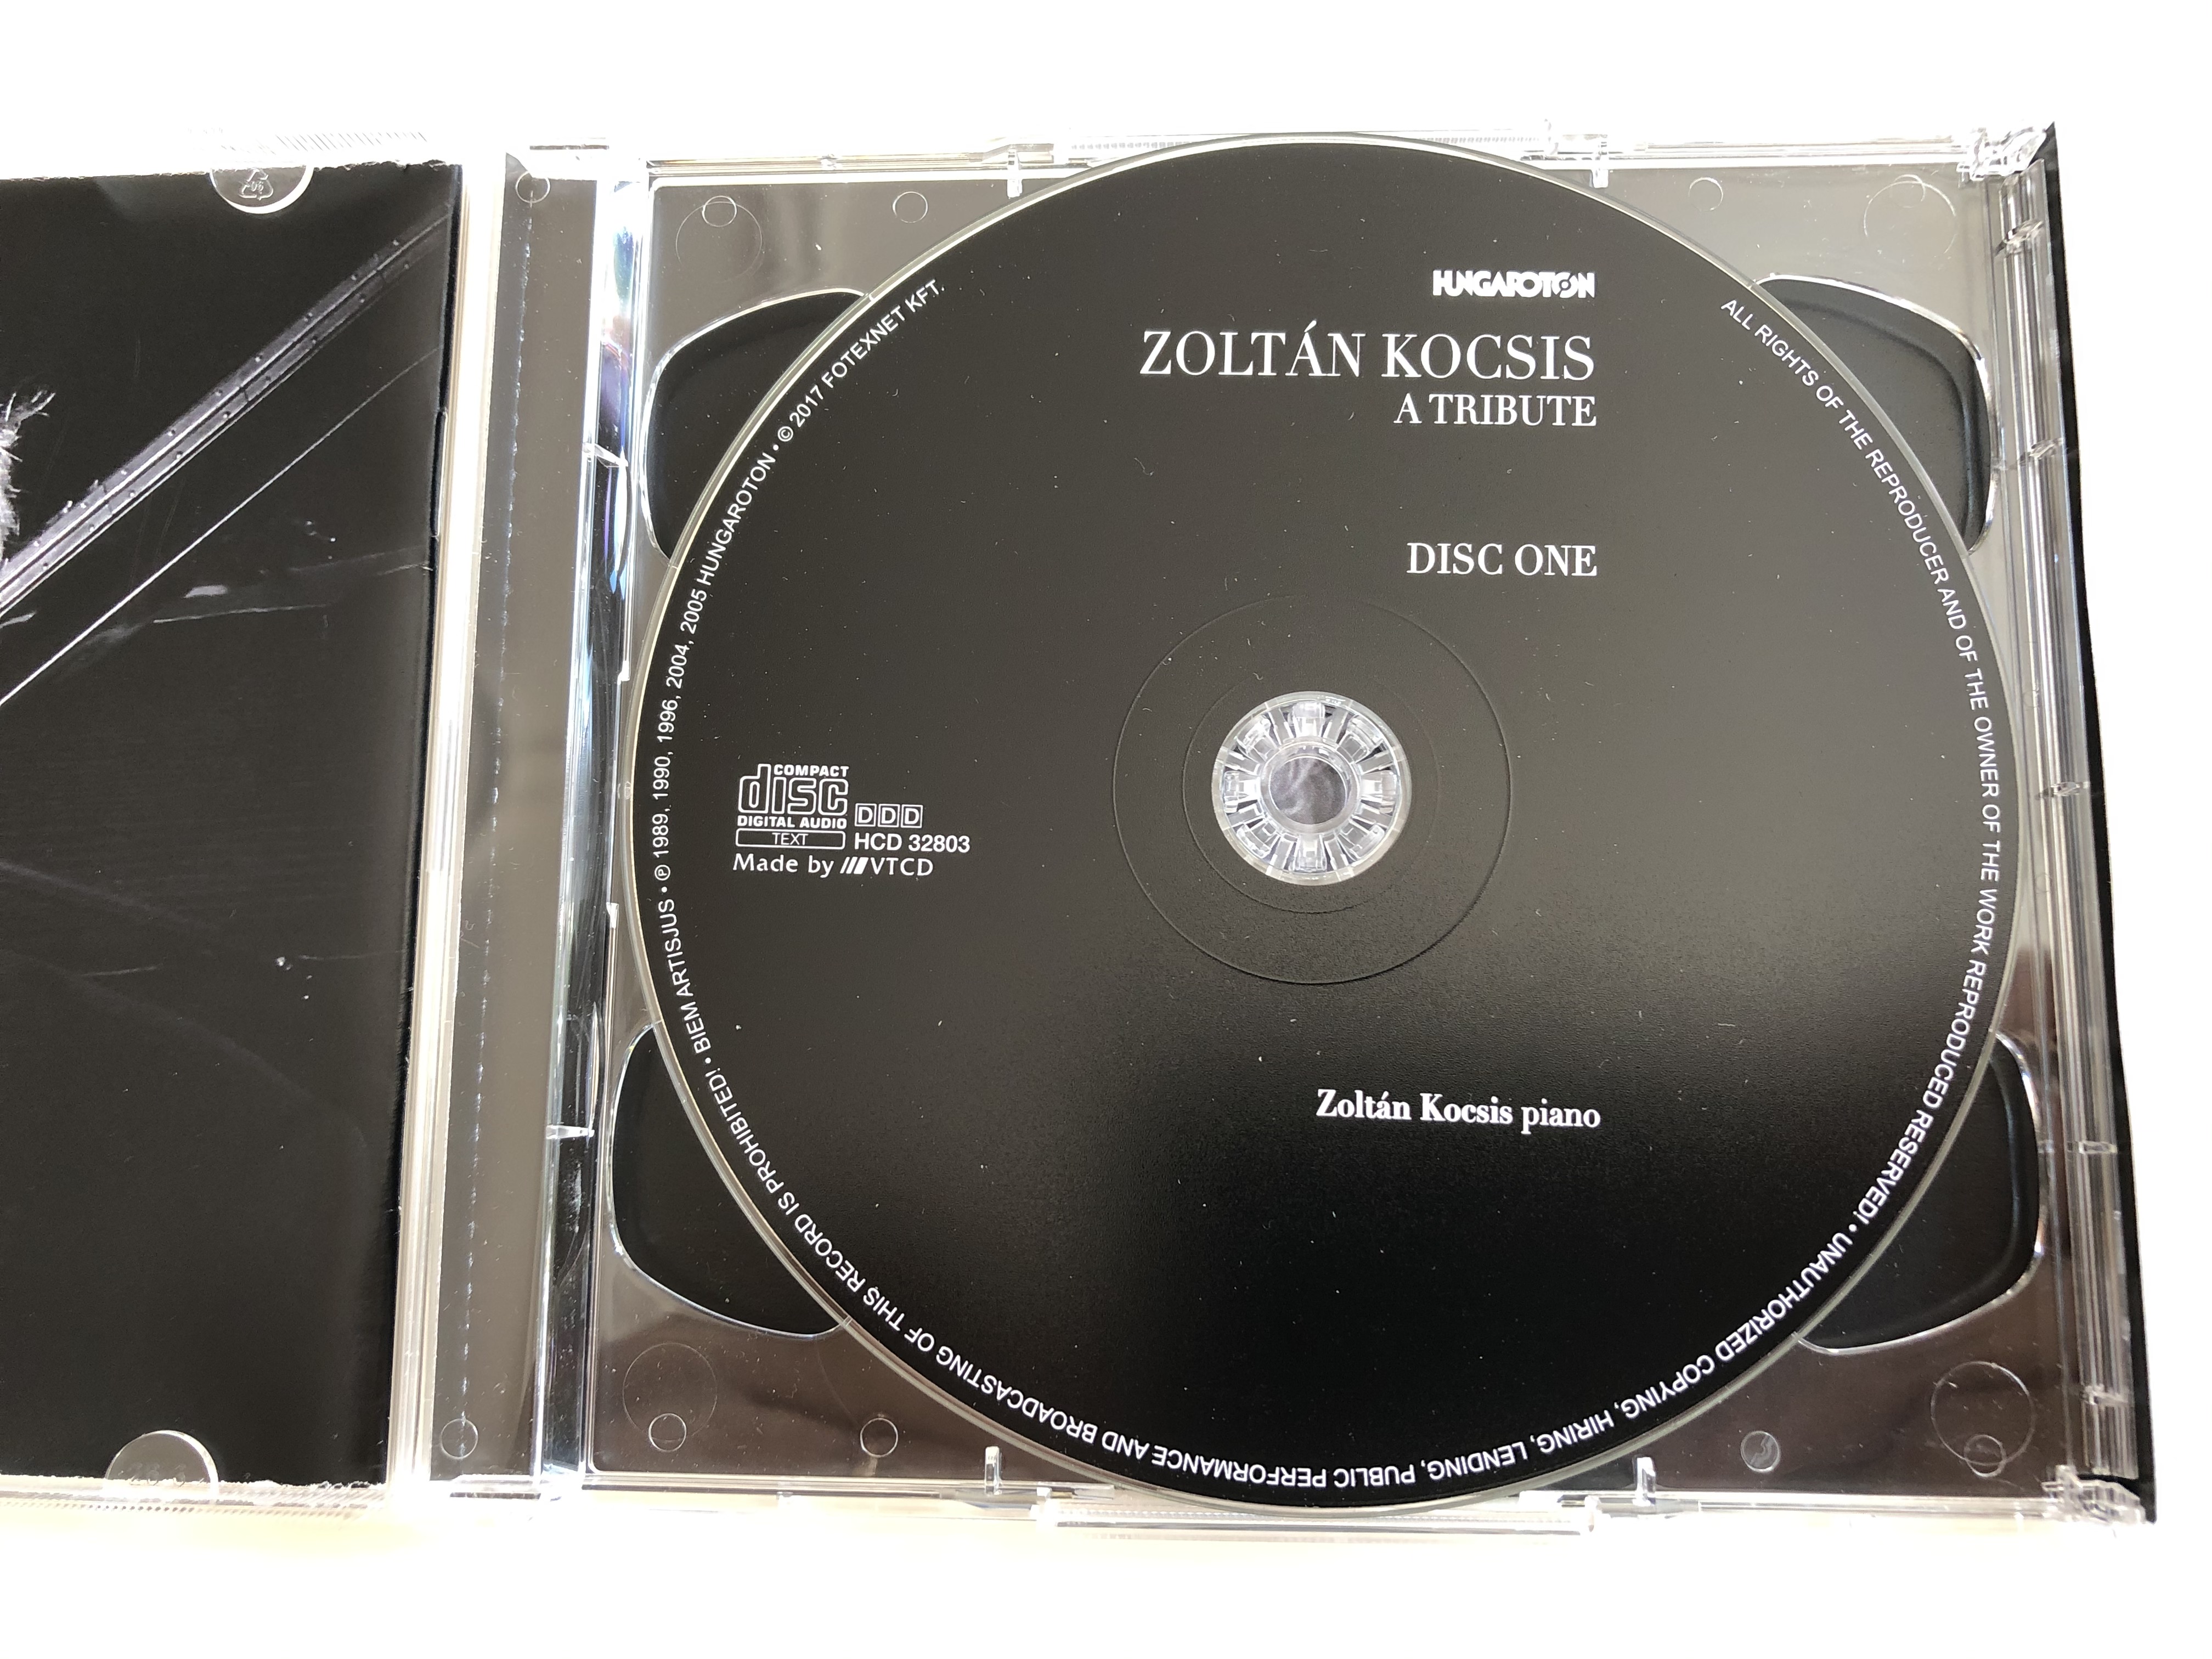 zolt-n-kocsis-a-tribute-hungaroton-2x-audio-cd-2017-hcd-32803-04-10-.jpg